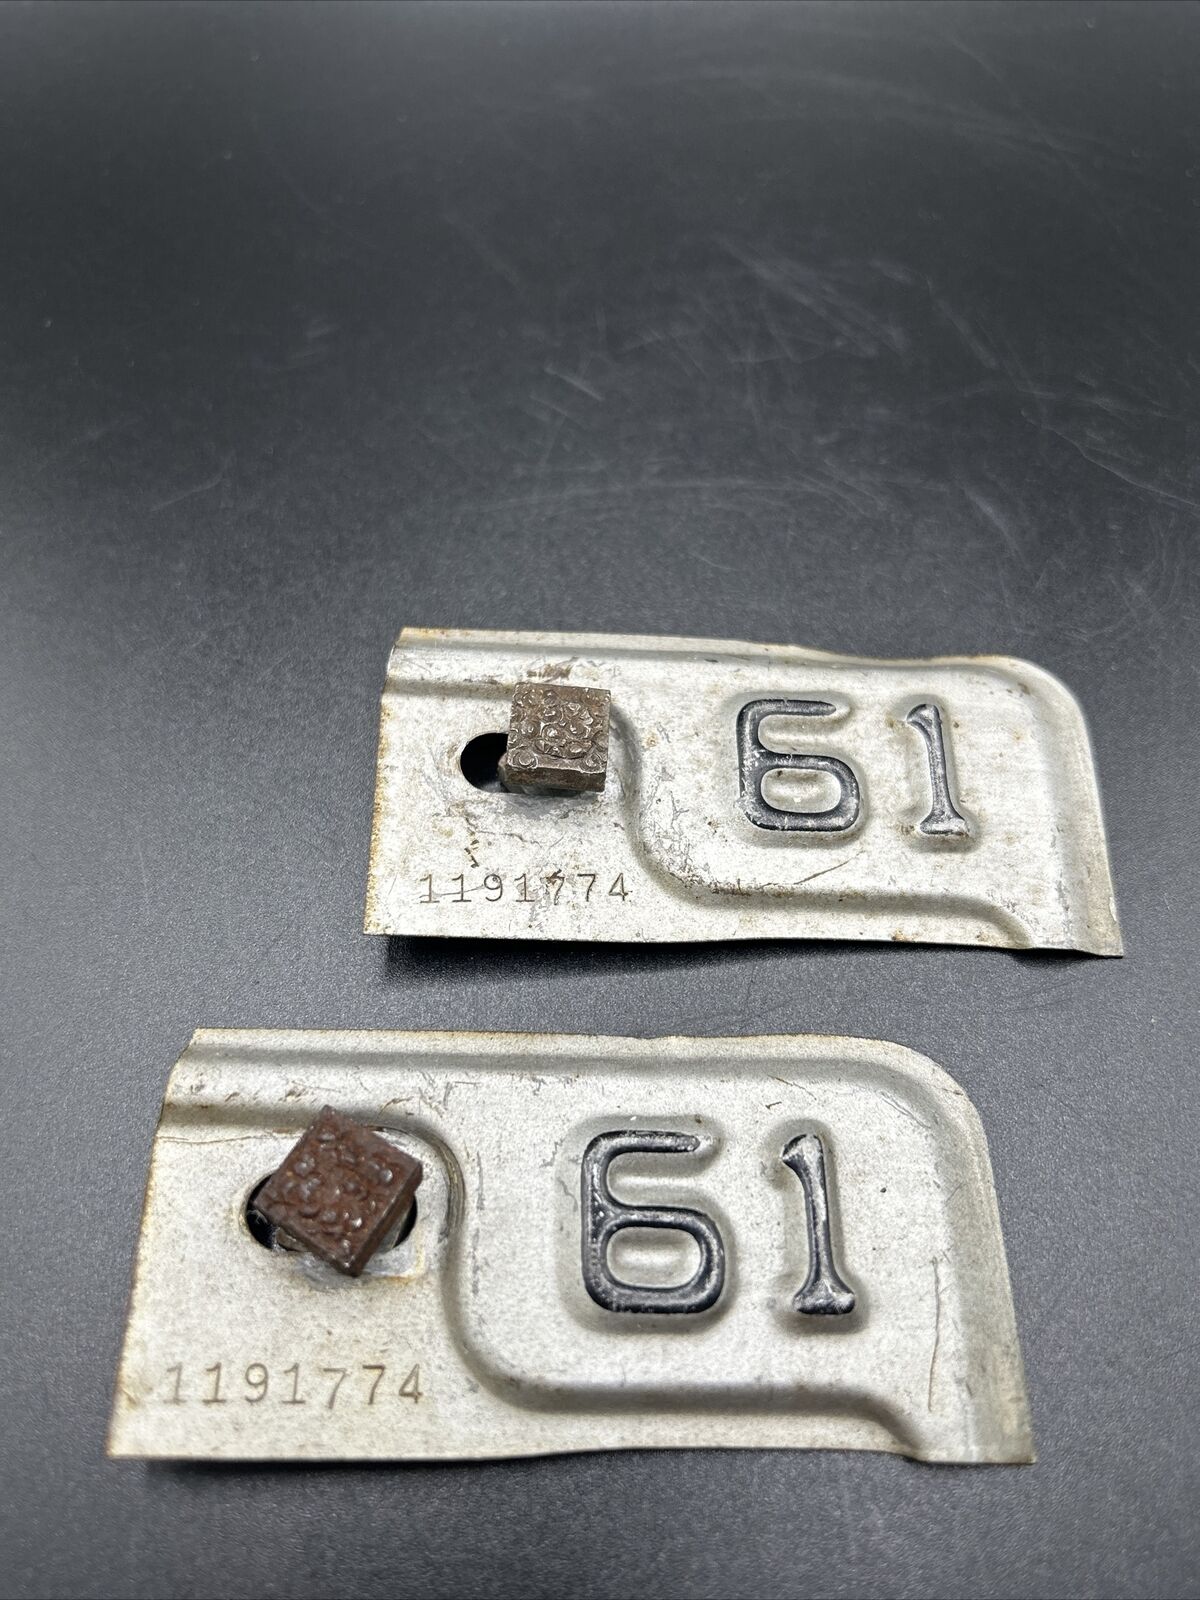 1961 Michigan License Plate Matching Pair Metal Renew Registration Tabs #1191774